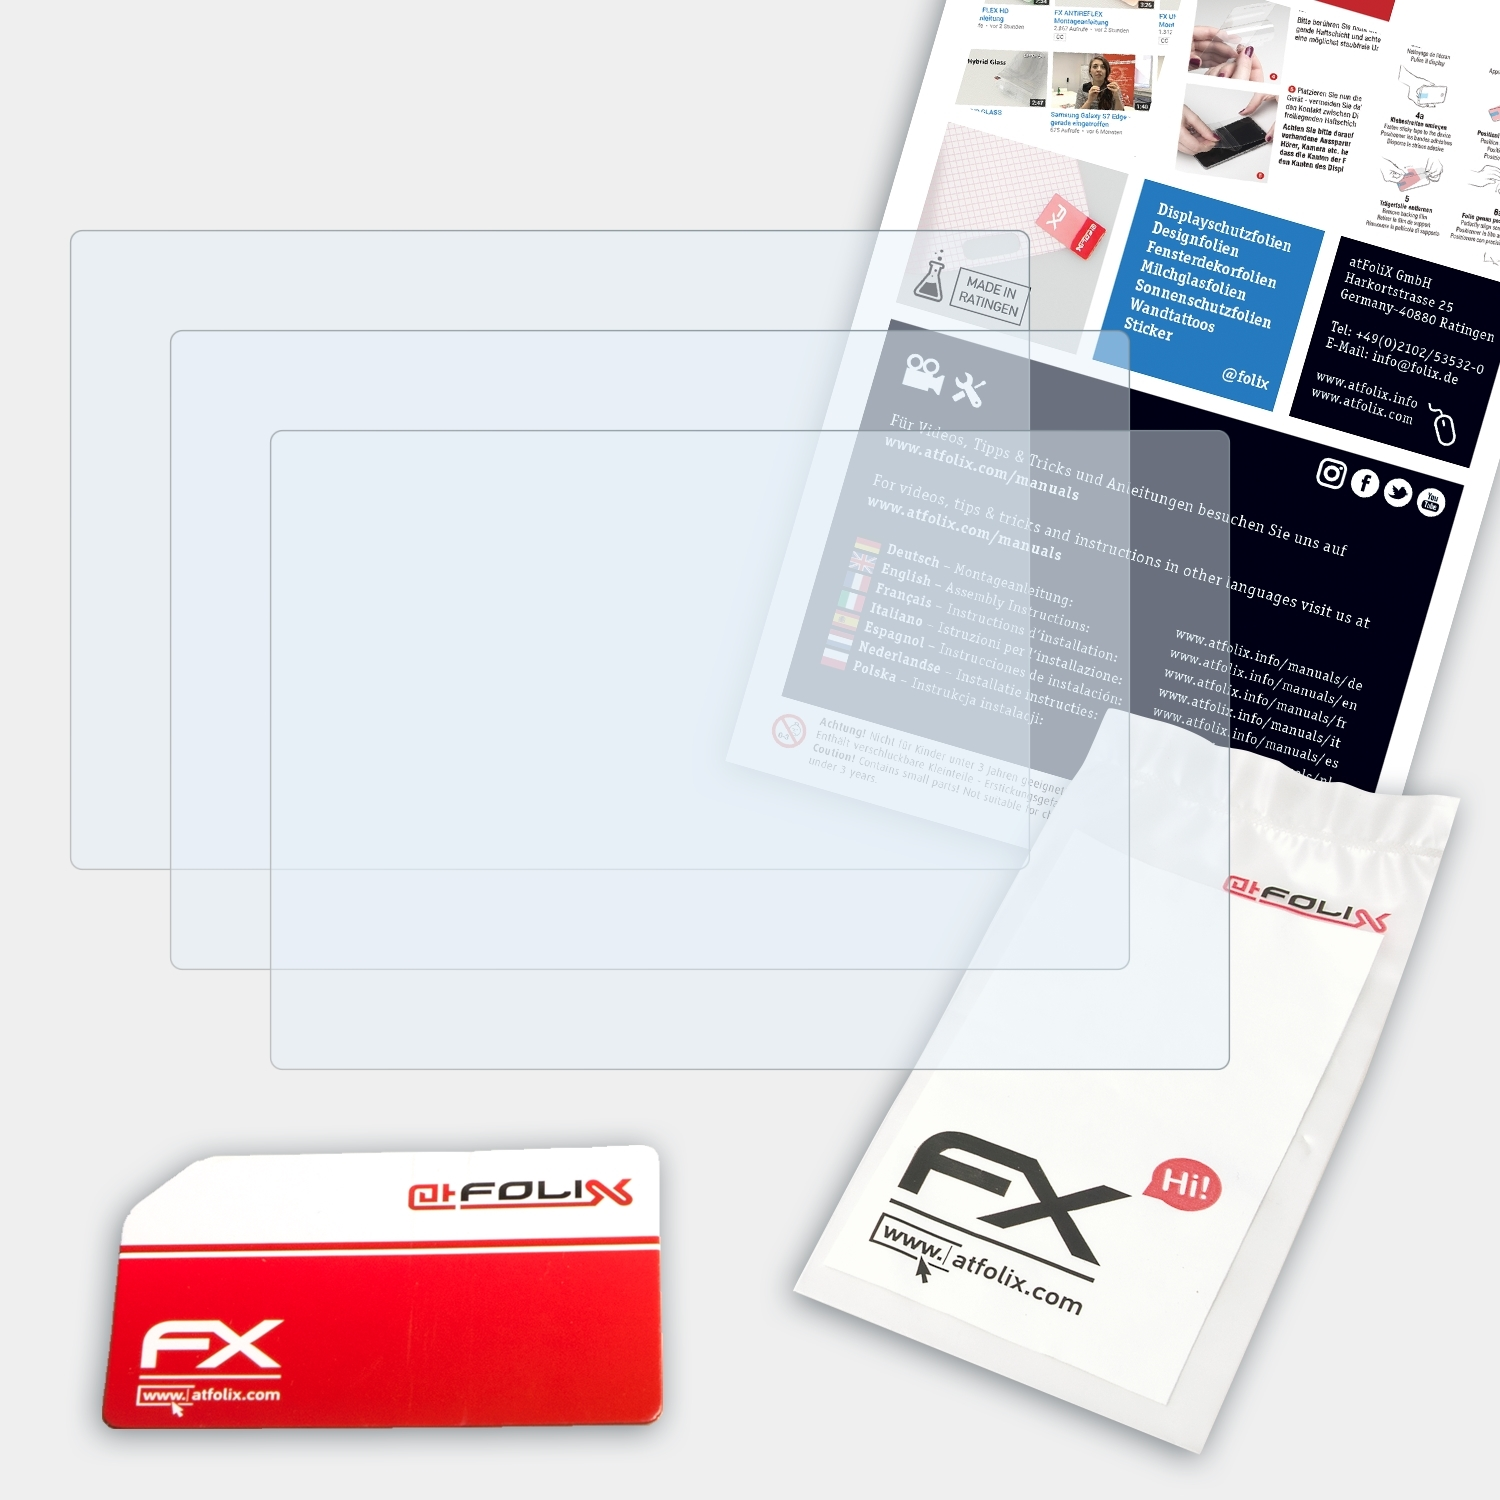 ATFOLIX 3x FX-Clear DC-S1H) Panasonic Lumix Displayschutz(für